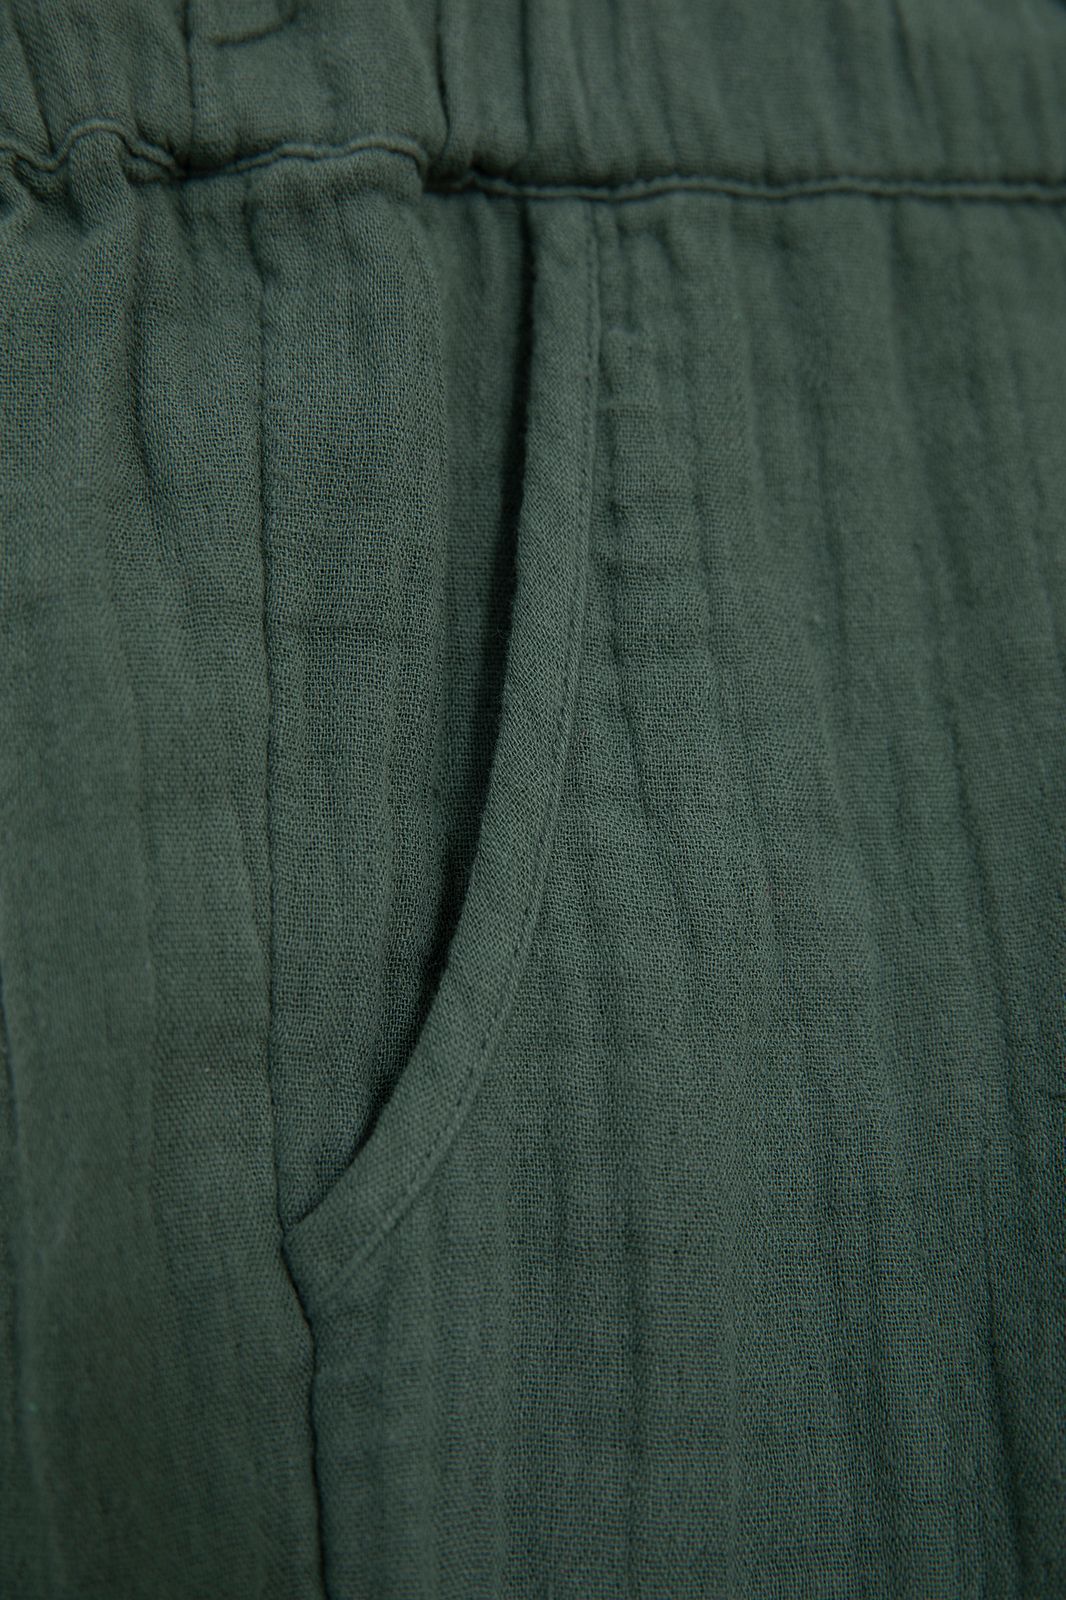 Jogginghose aus Baumwolle - dunkelgrün